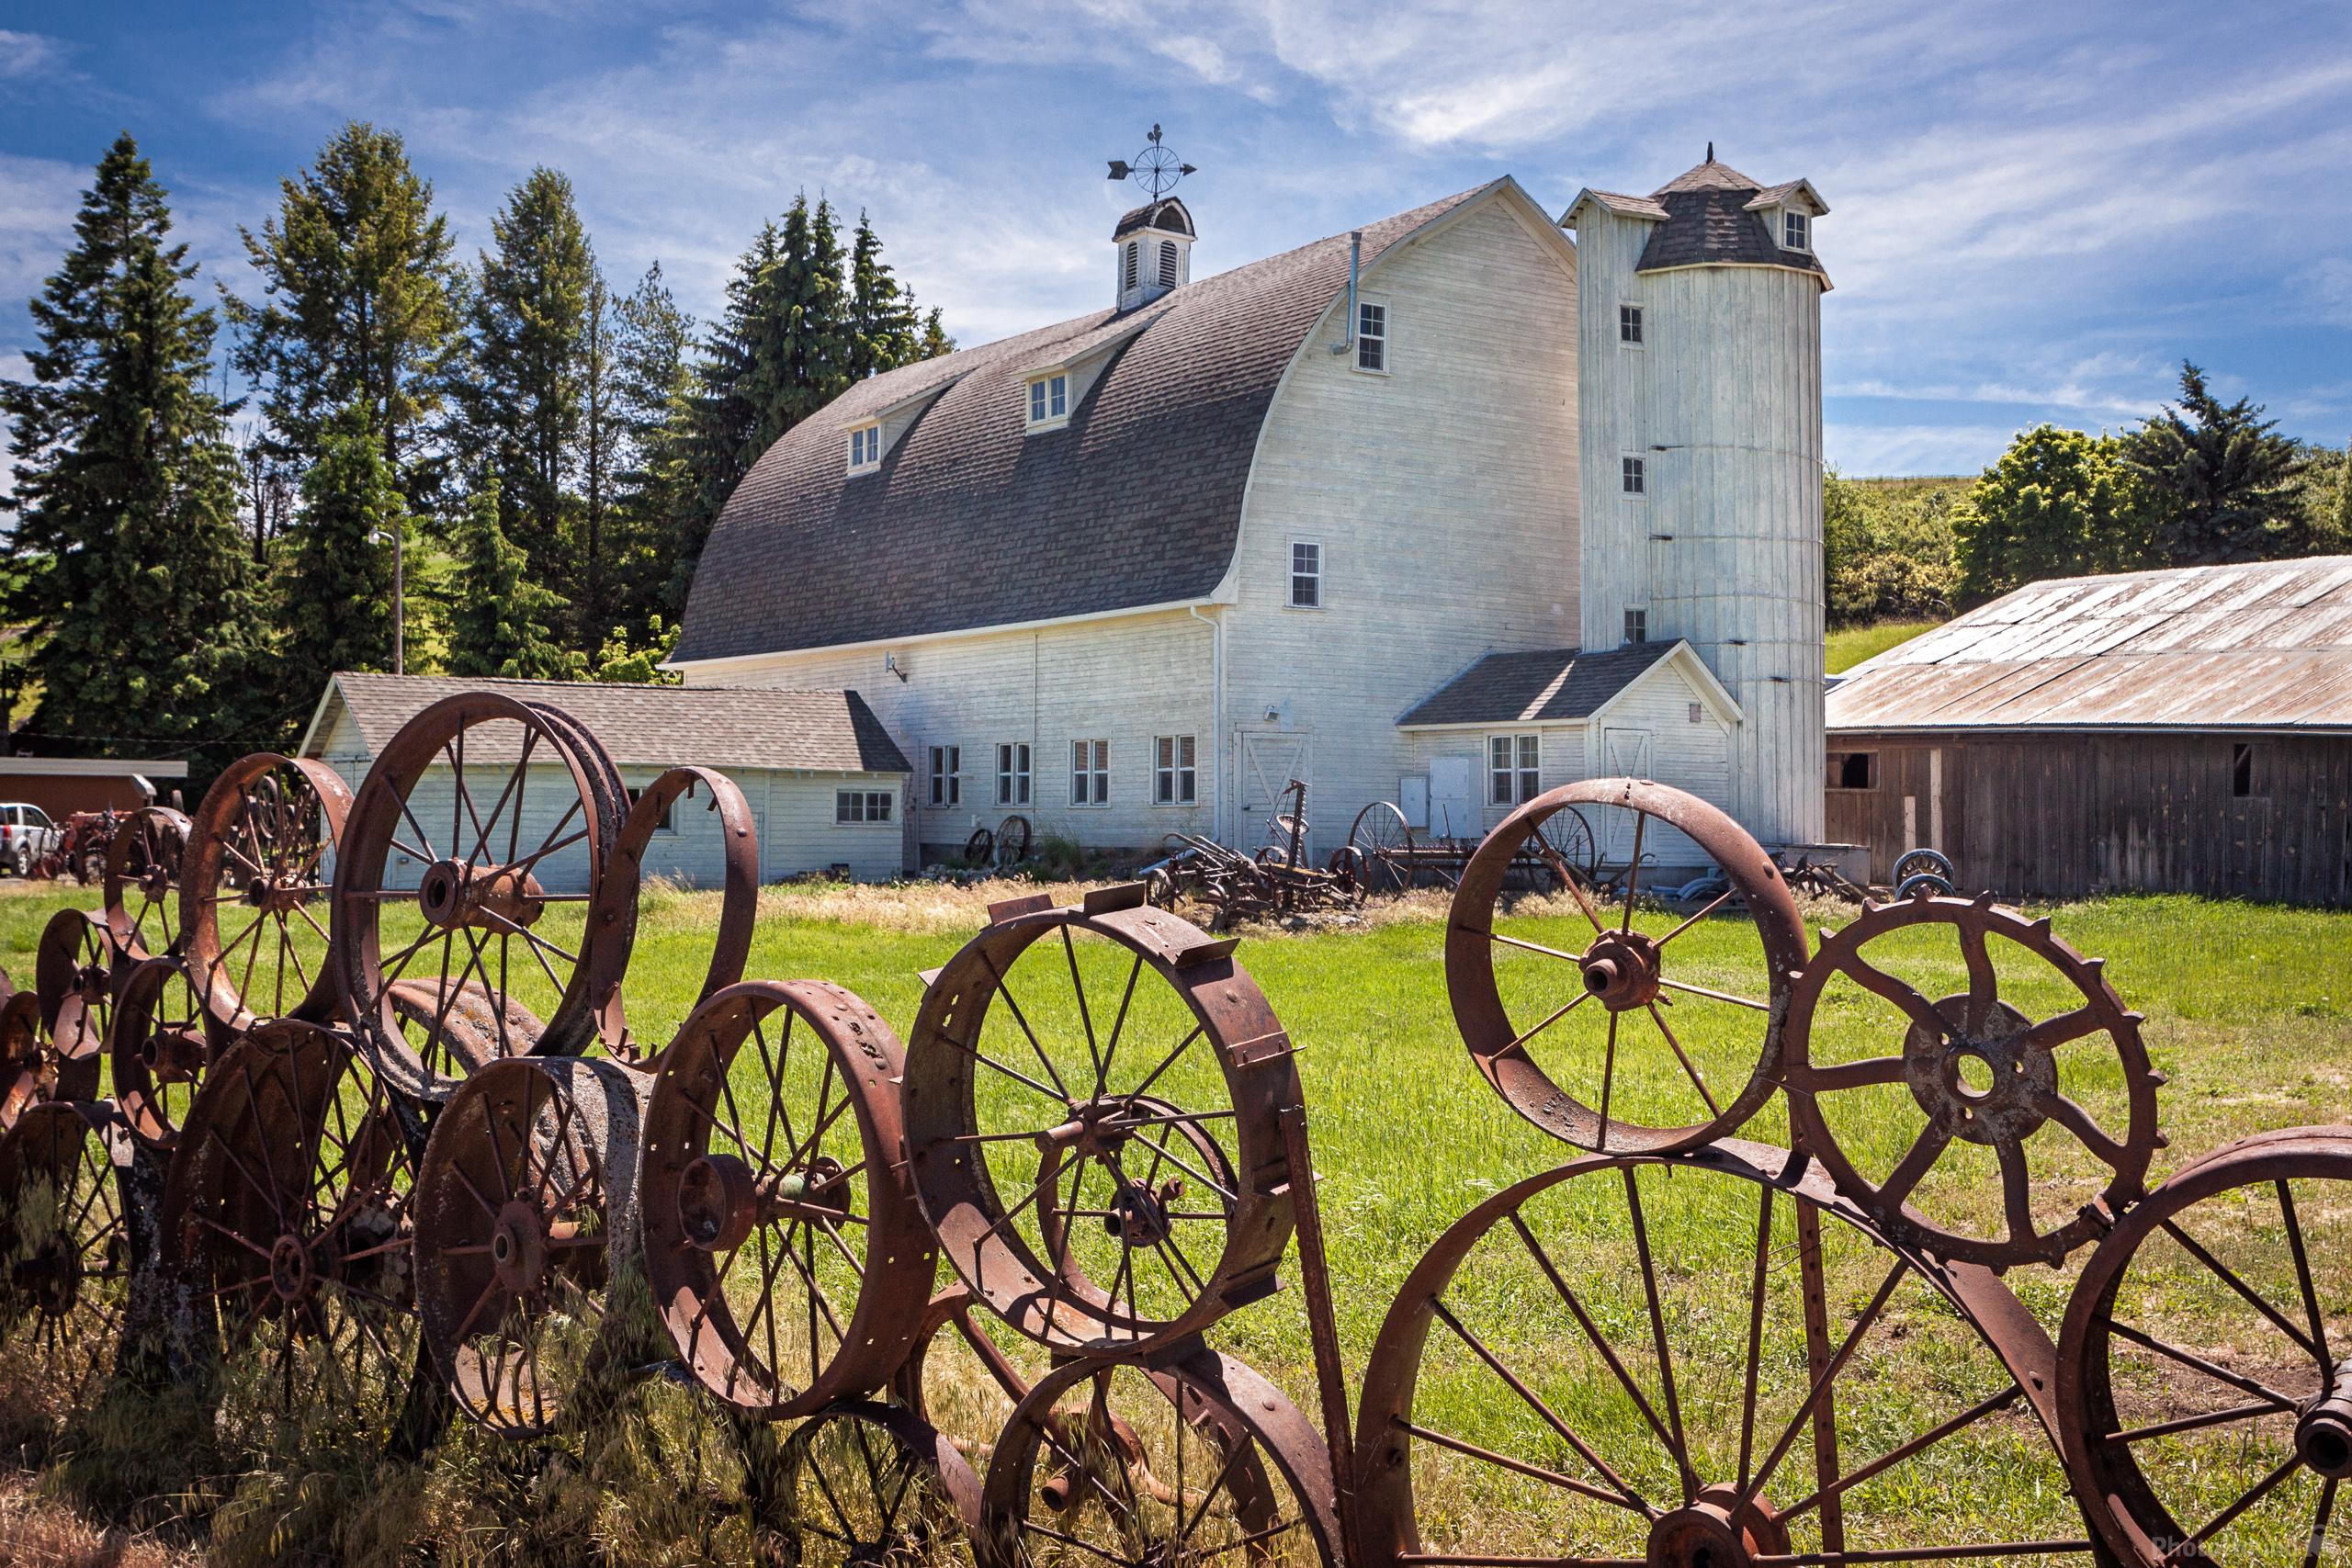 Image of Dahmen Barn and Wagon Wheel Fence by Joe Becker